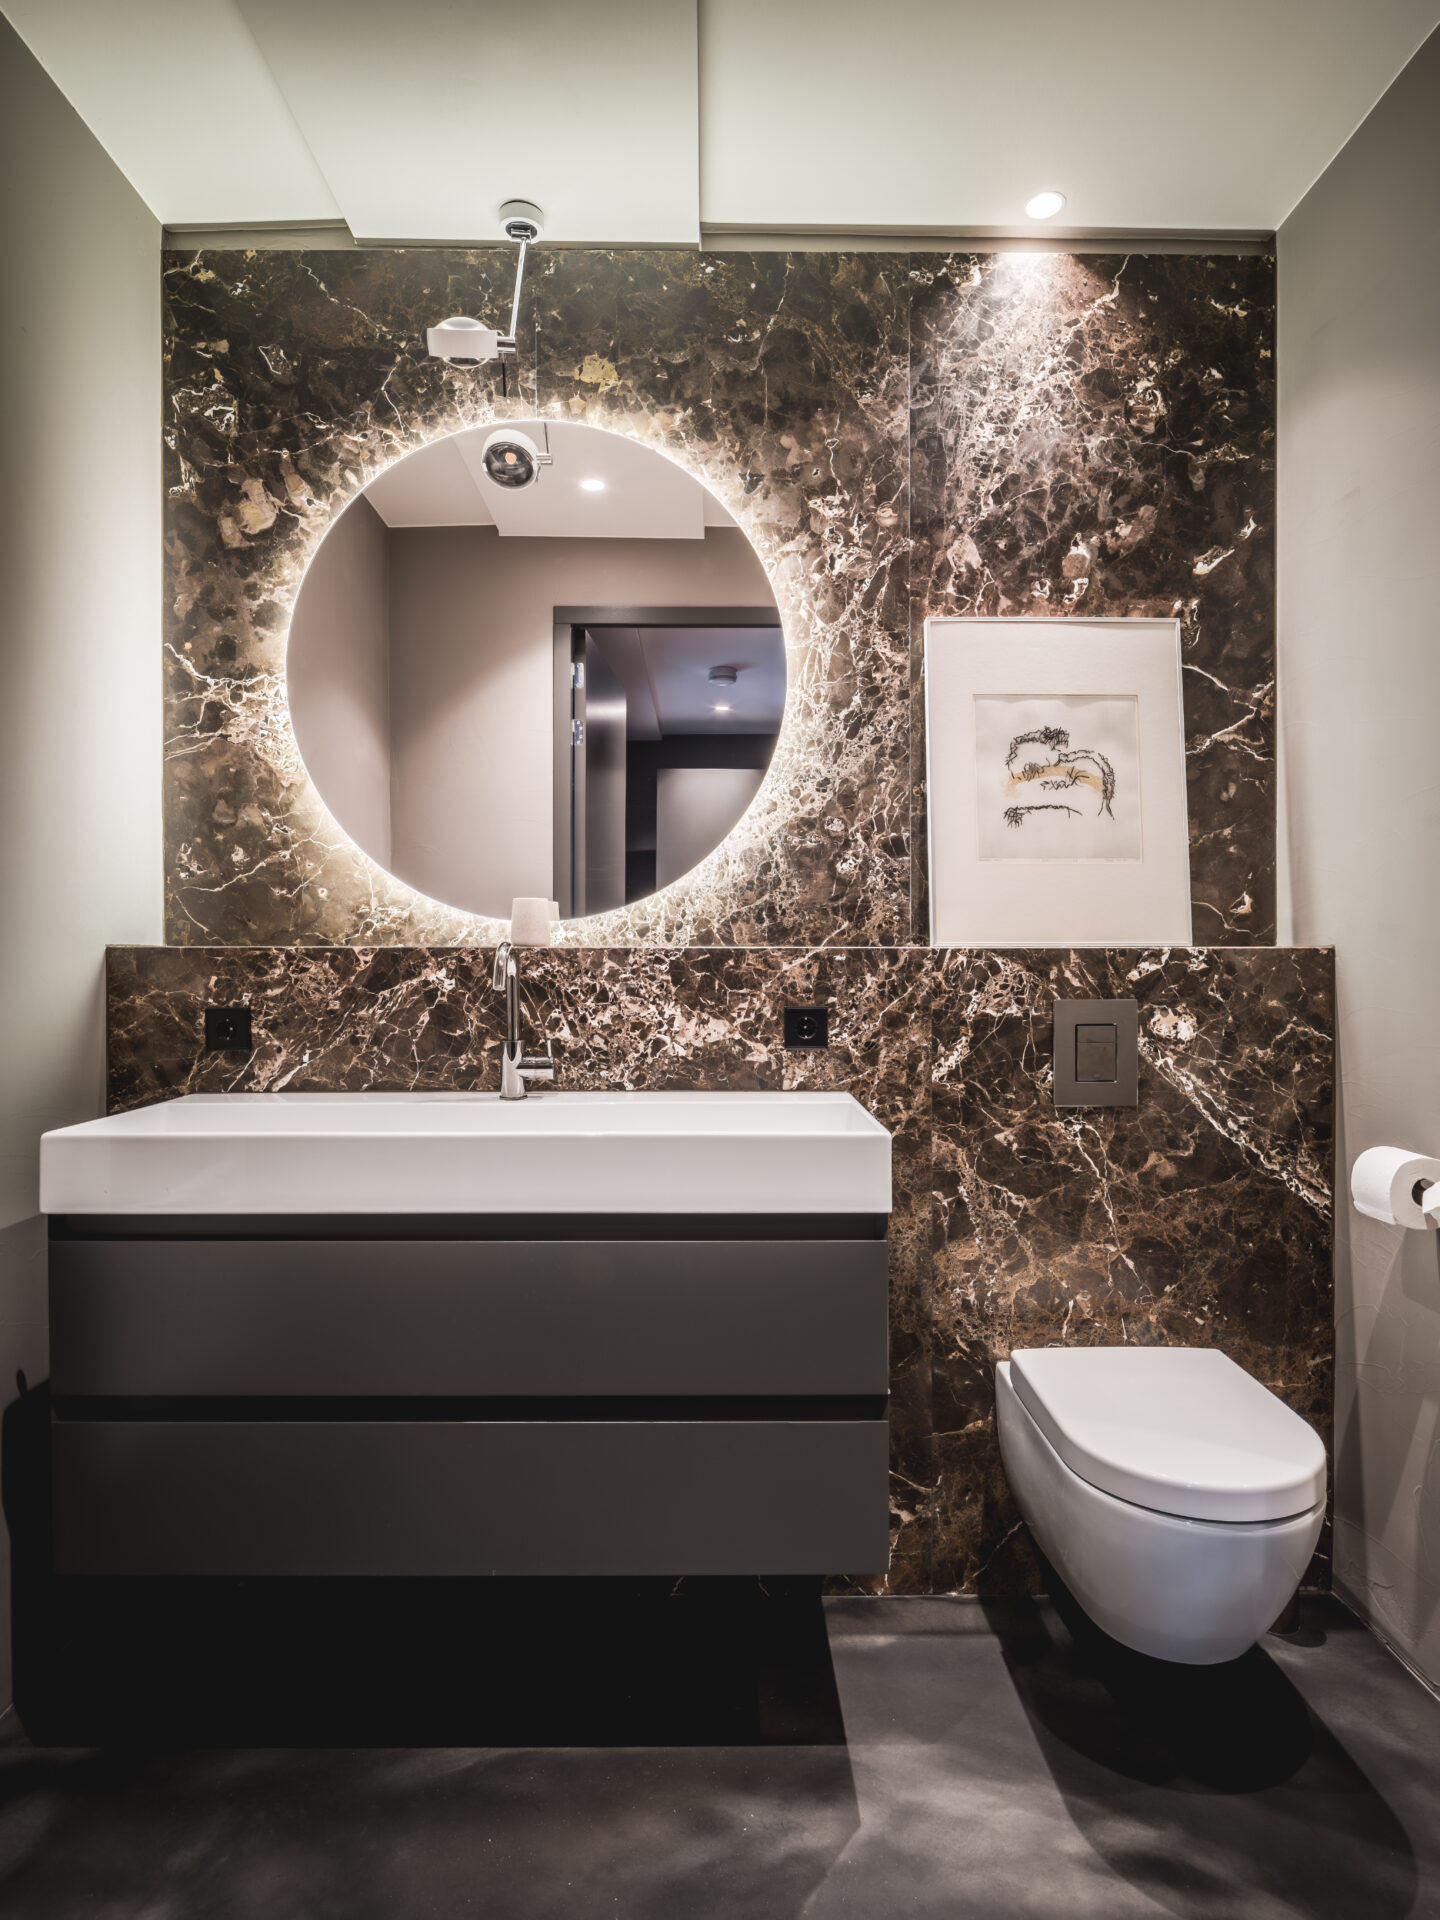 Marble bathroom interior design by Emyko